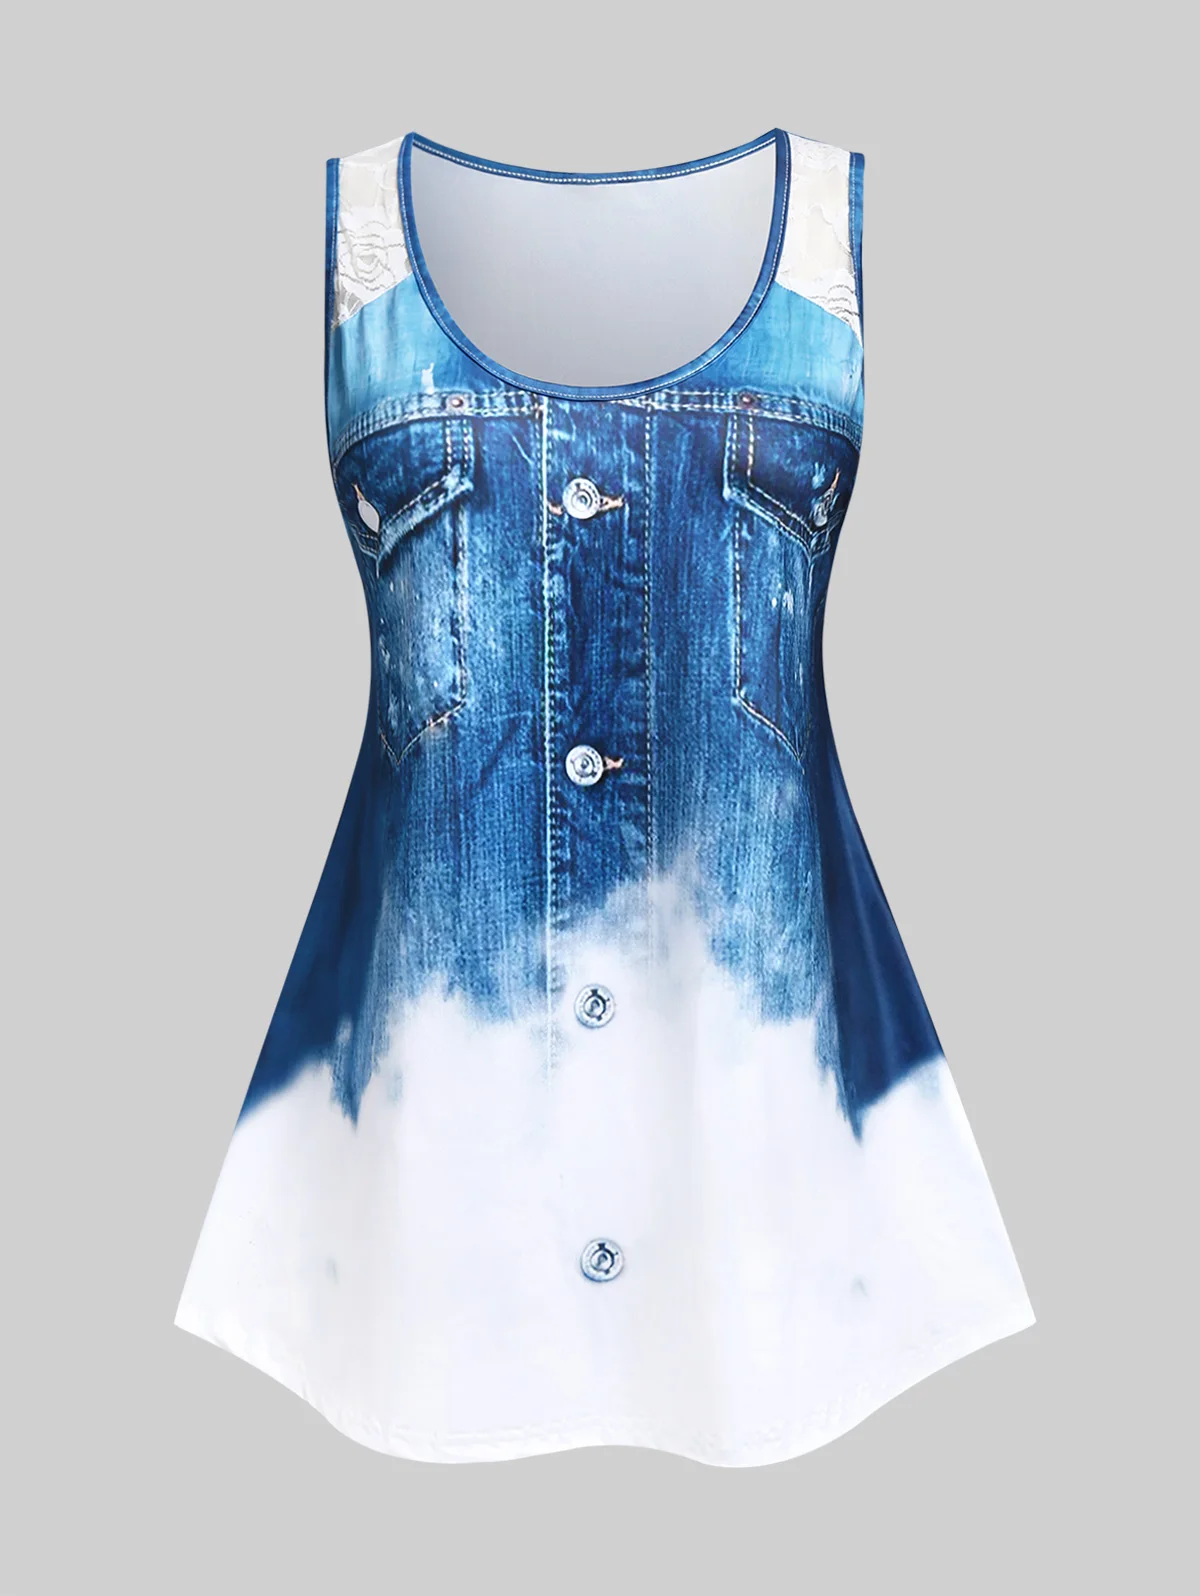 

ROSEGAL 3D Jean Print Top Summer Tunic Tanks For Women Lace Panel Camisole Shirt Ladies Fashion Scoop Neck Vest